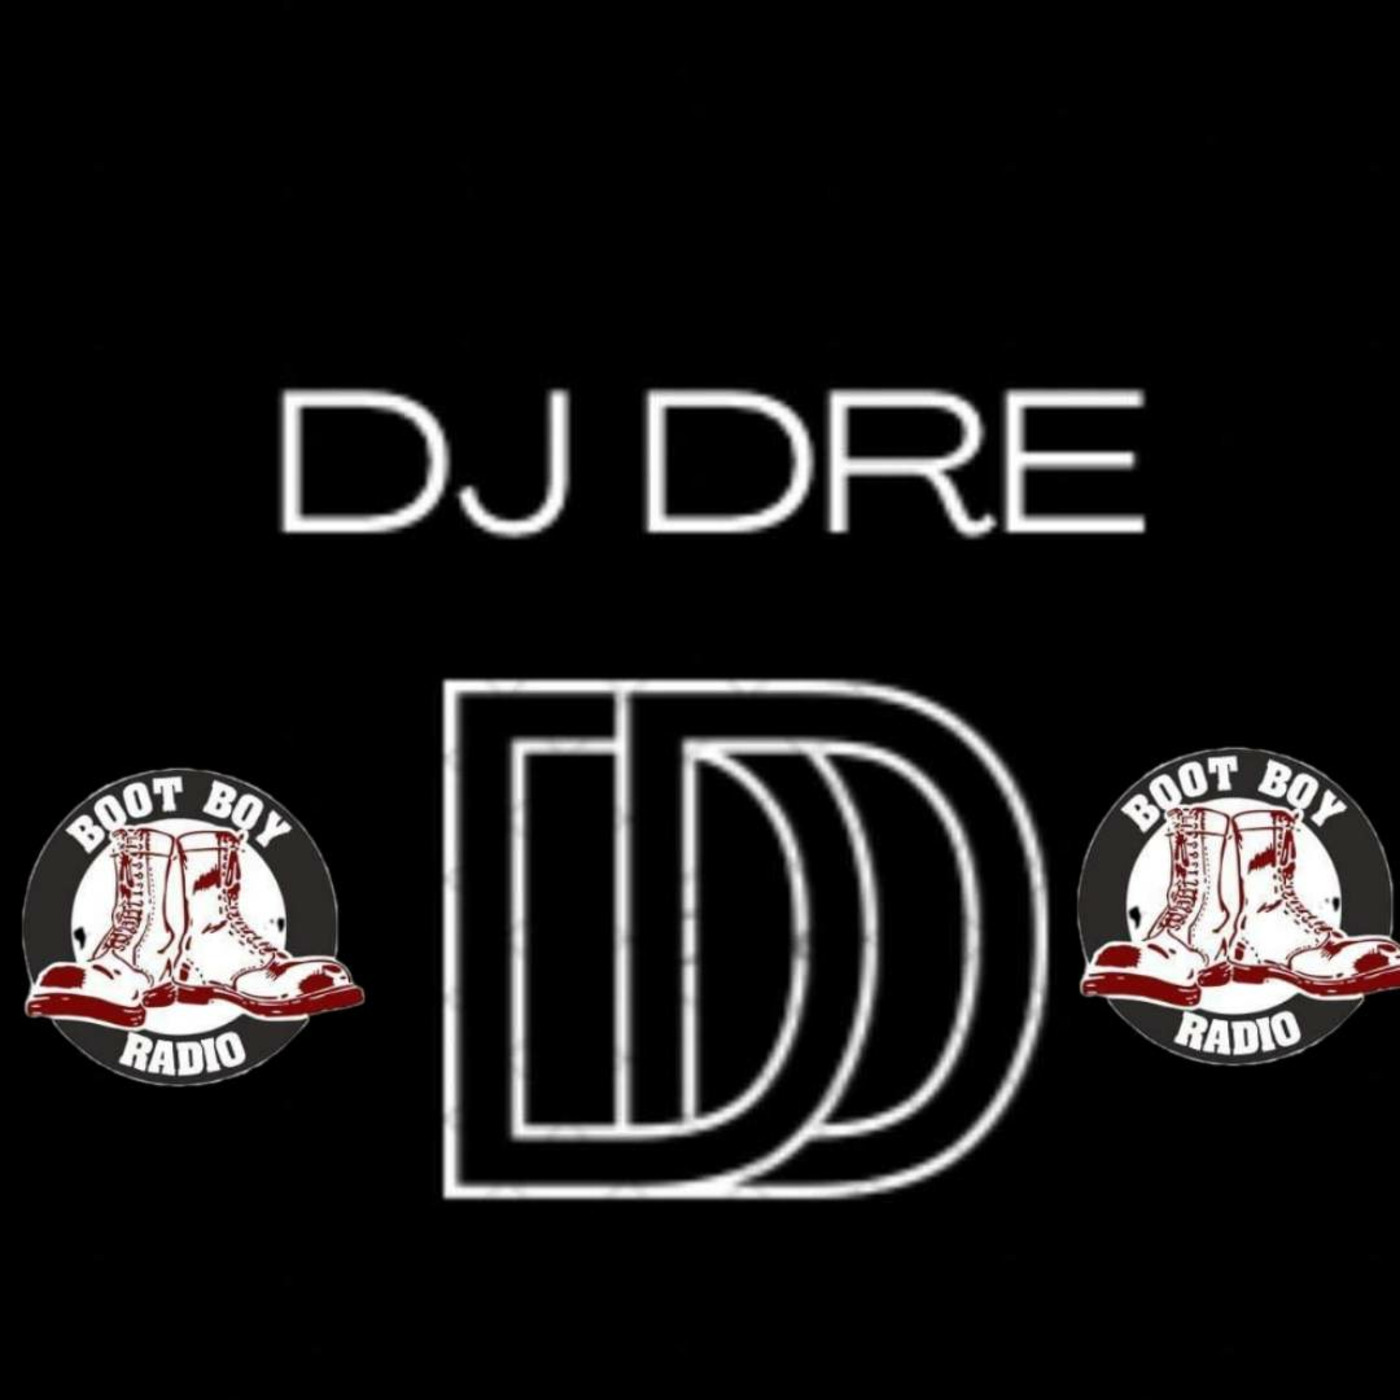 Episode 3019: Dj Dre Show 7 19th Jan 2023 On www.bootboyradio.net